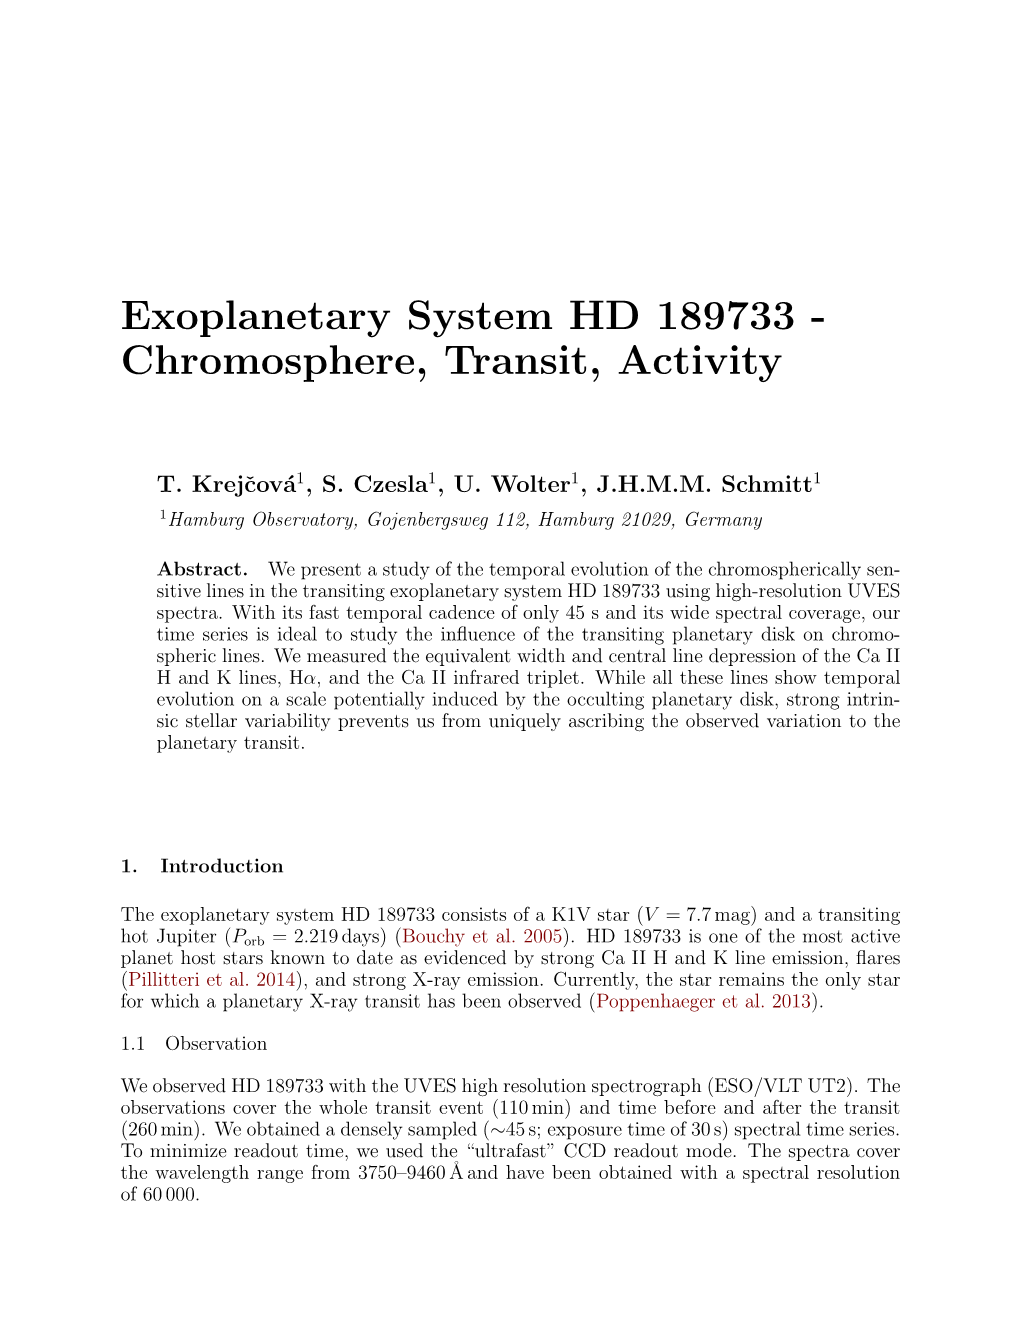 Exoplanetary System HD 189733 - Chromosphere, Transit, Activity